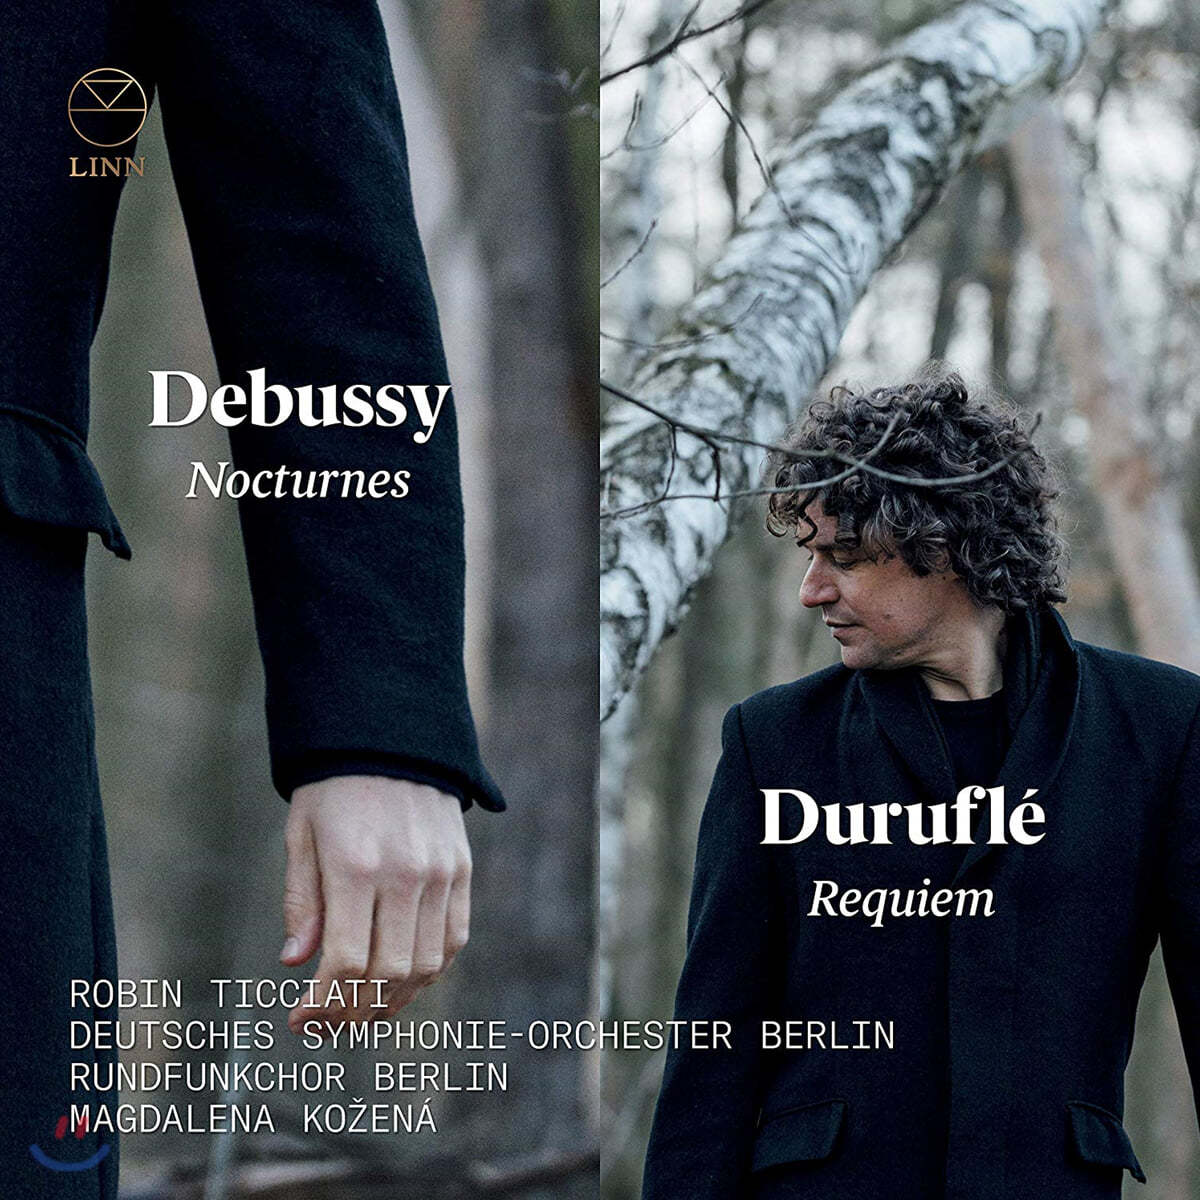 Robin Ticciati / Magdalena Kozena 드뷔시: 녹턴 / 뒤뤼플레: 레퀴엠 - 로빈 티치아티 (Debussy: Nocturnes / Durufle: Requiem)